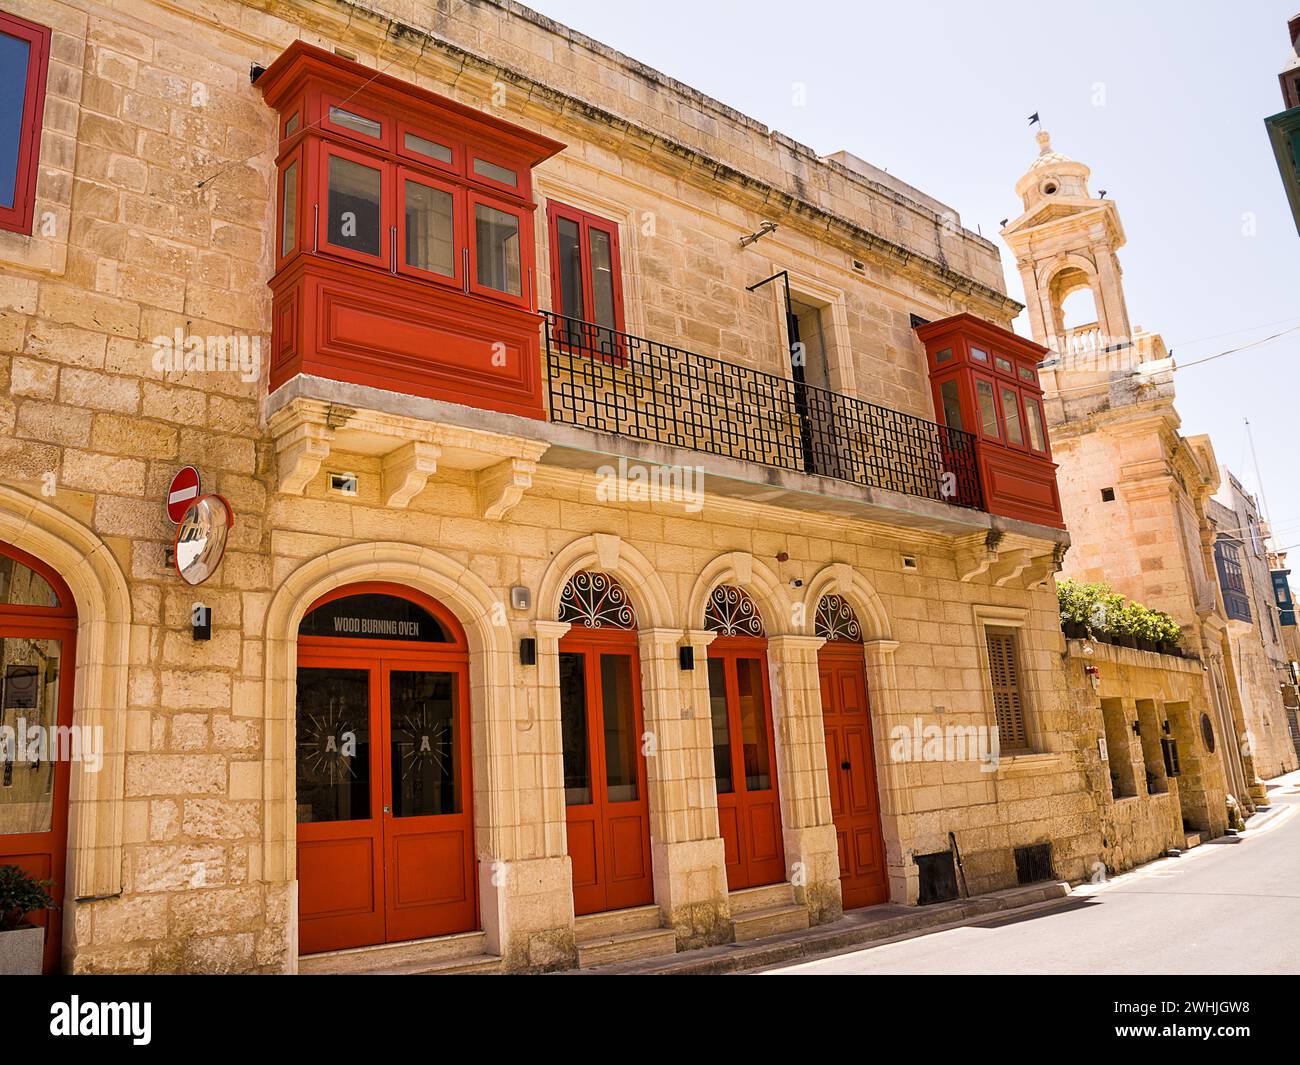 Gallarija, closed balconies, typical of Malta, and bell tower of the church of Santa Maria di Doni Stock Photo